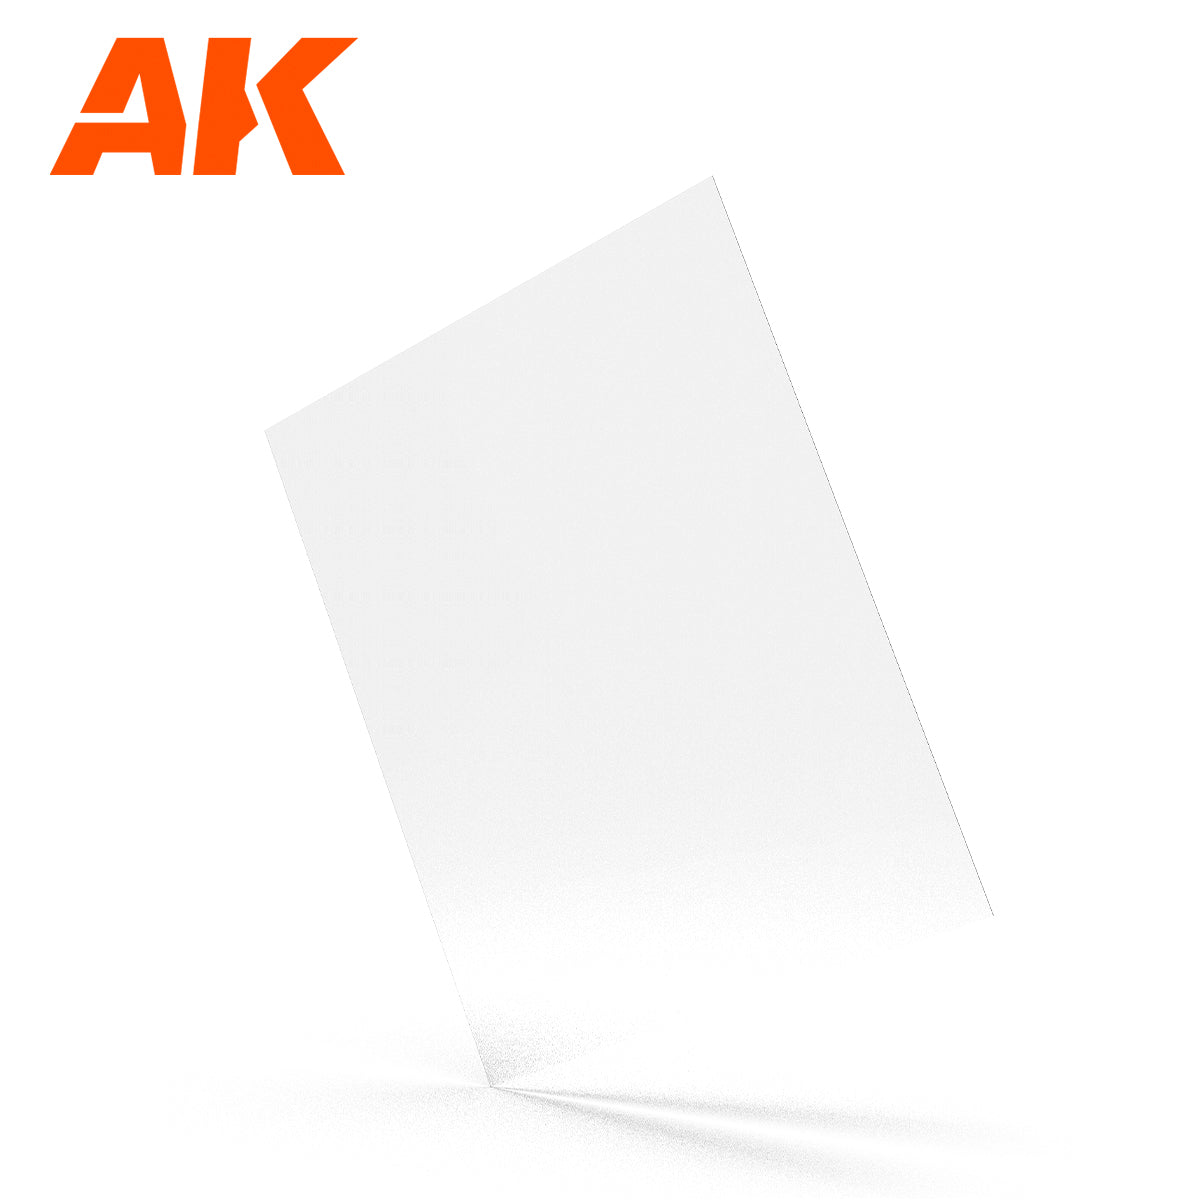 AK6586 - Clear Organic Glass/ Acrylic sheet - 0,40mm/0.016 thickness - 245 x 195mm